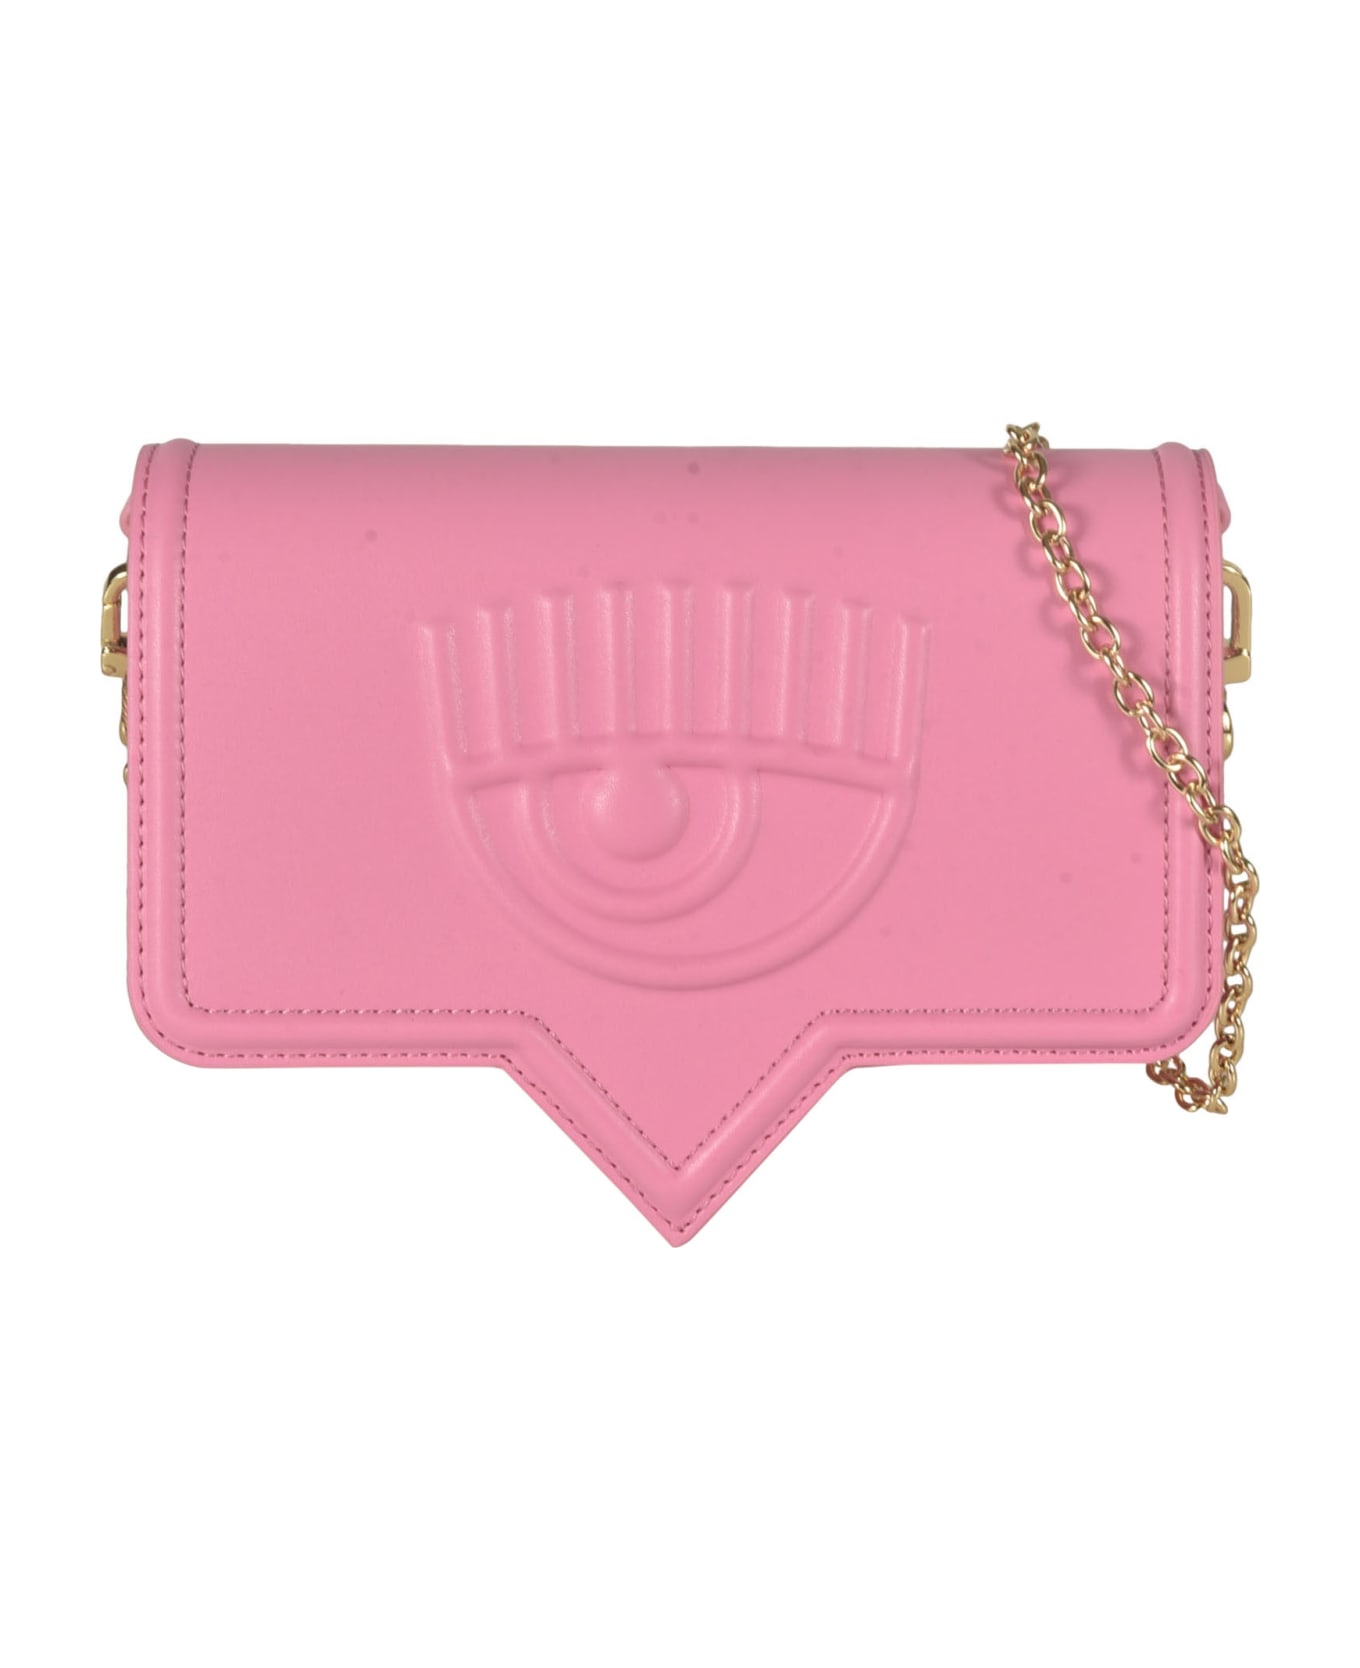 Chiara Ferragni Range A Eyelike Shoulder Bag - Sachet Pink